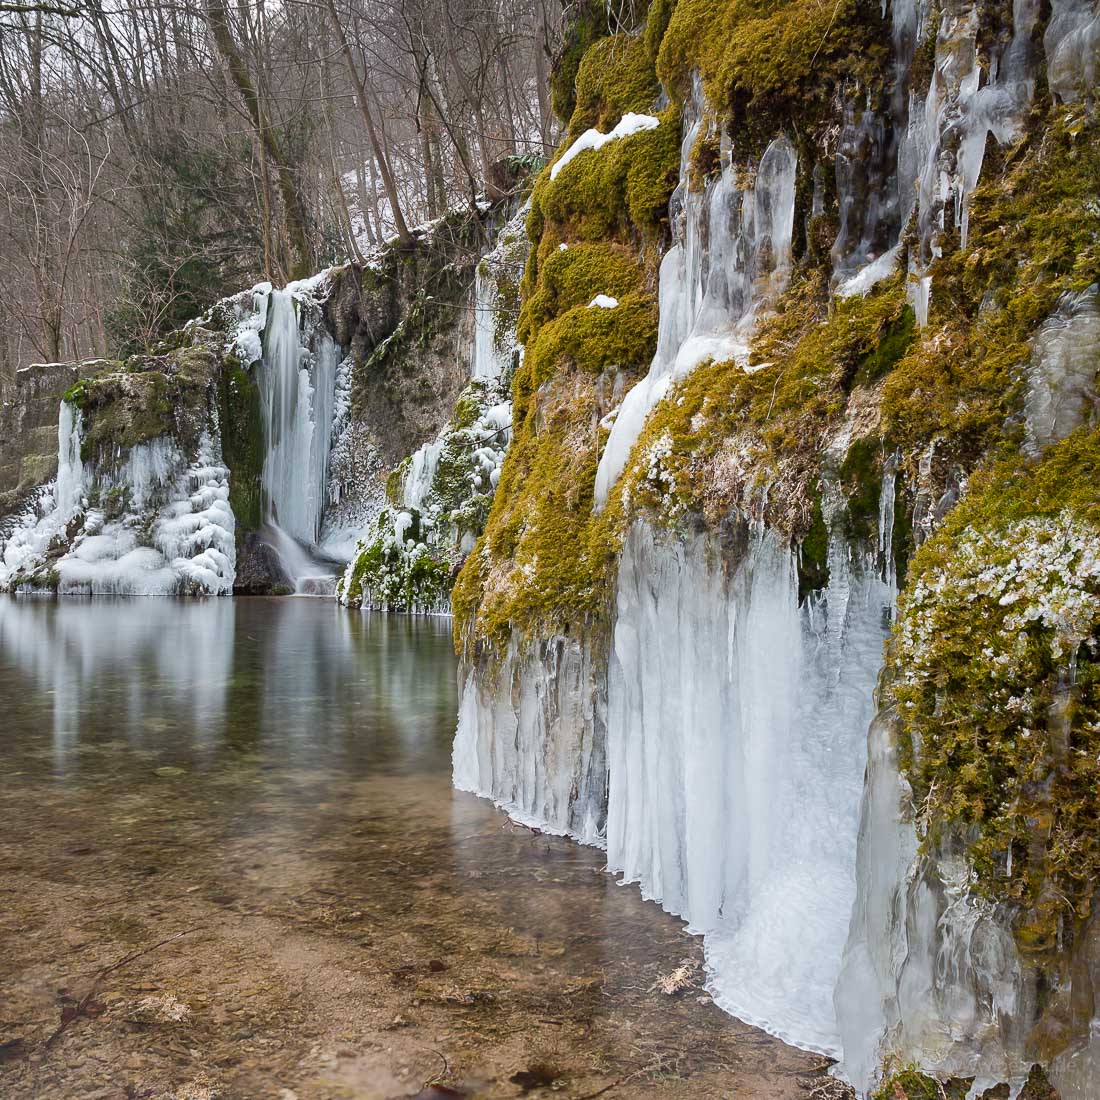 Gterstein waterfall in winter